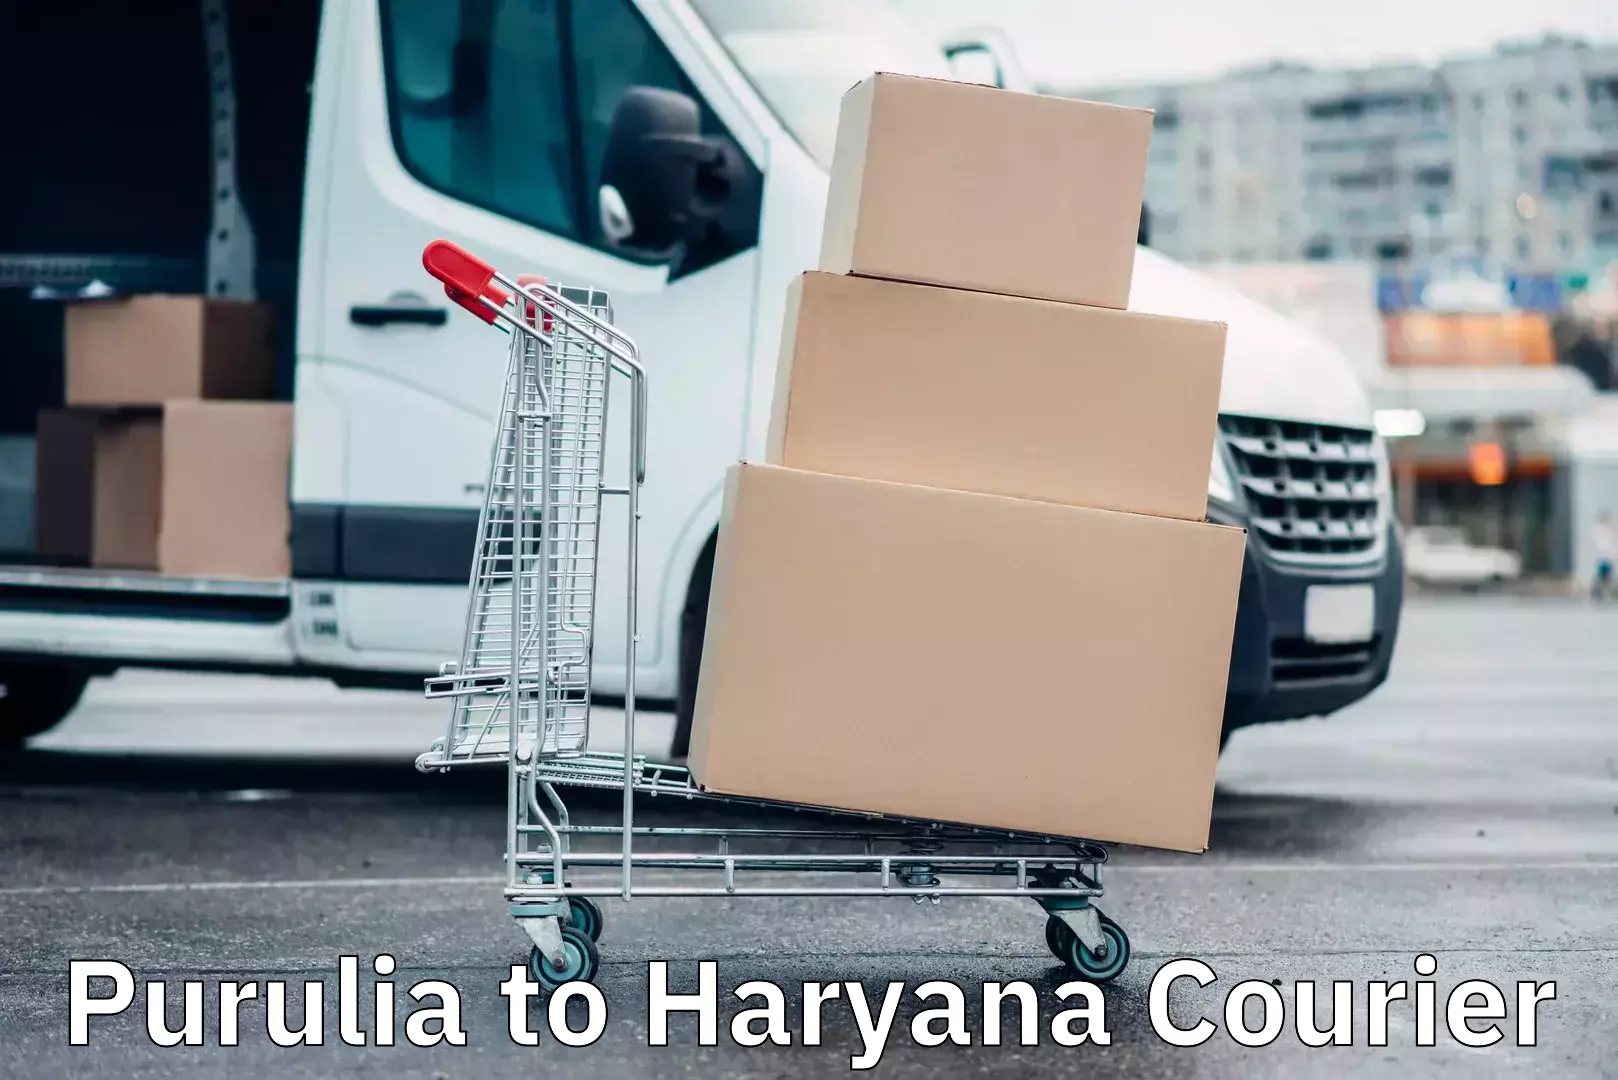 Global courier networks Purulia to Haryana